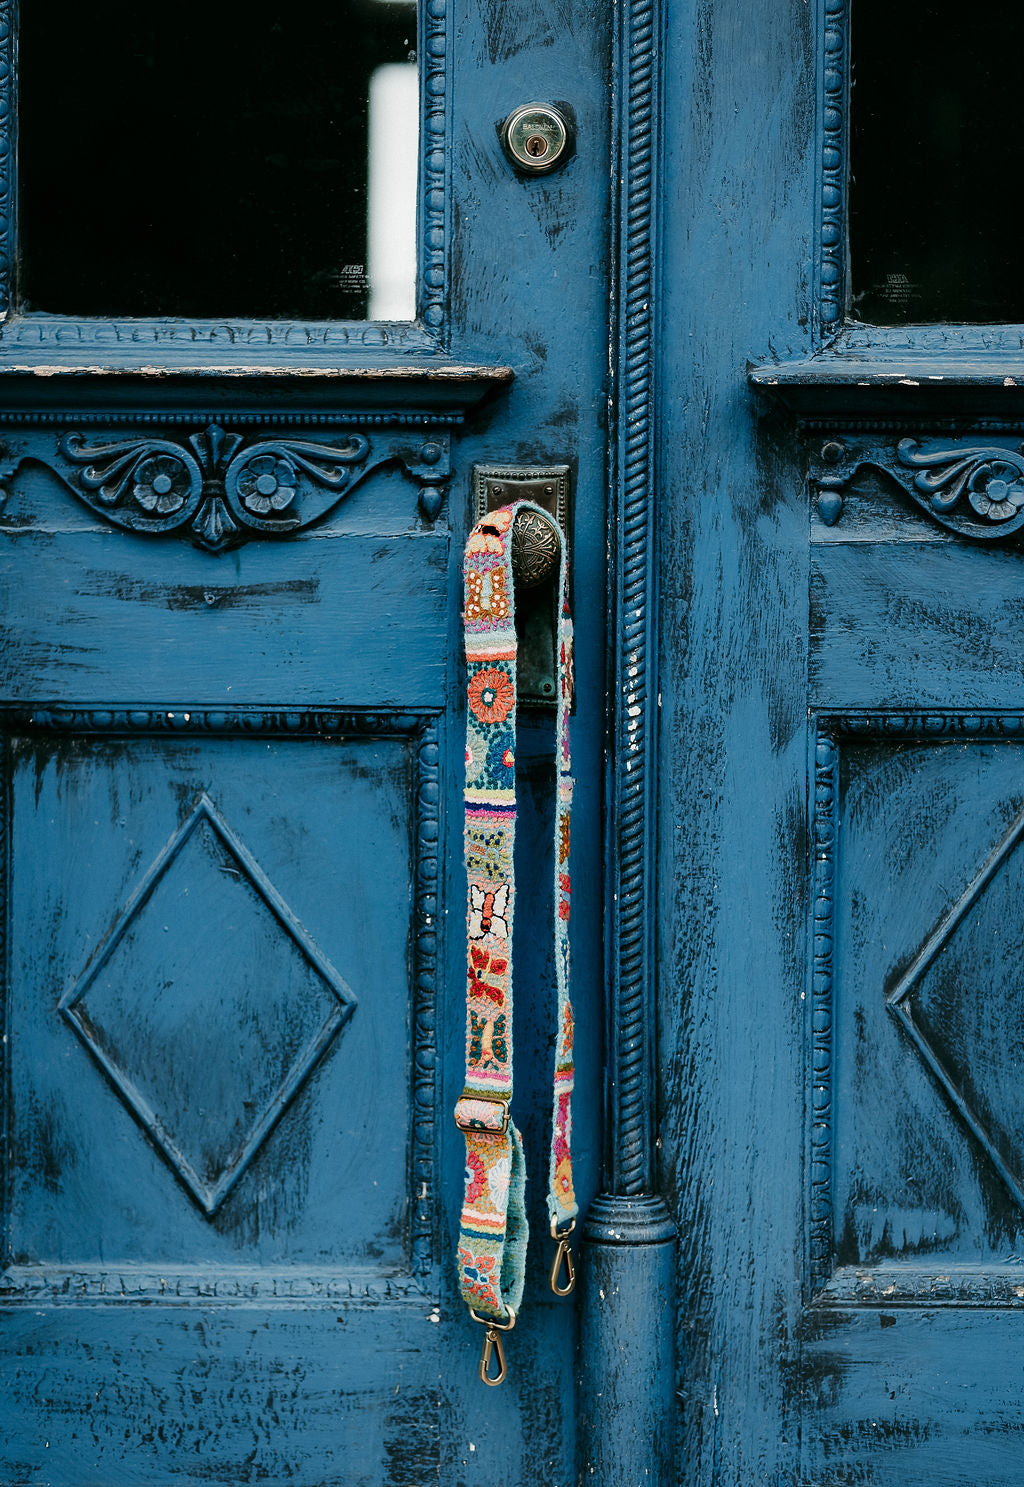 Butterfly Adjustable strap displayed hanging around the doorknob of a blue door.